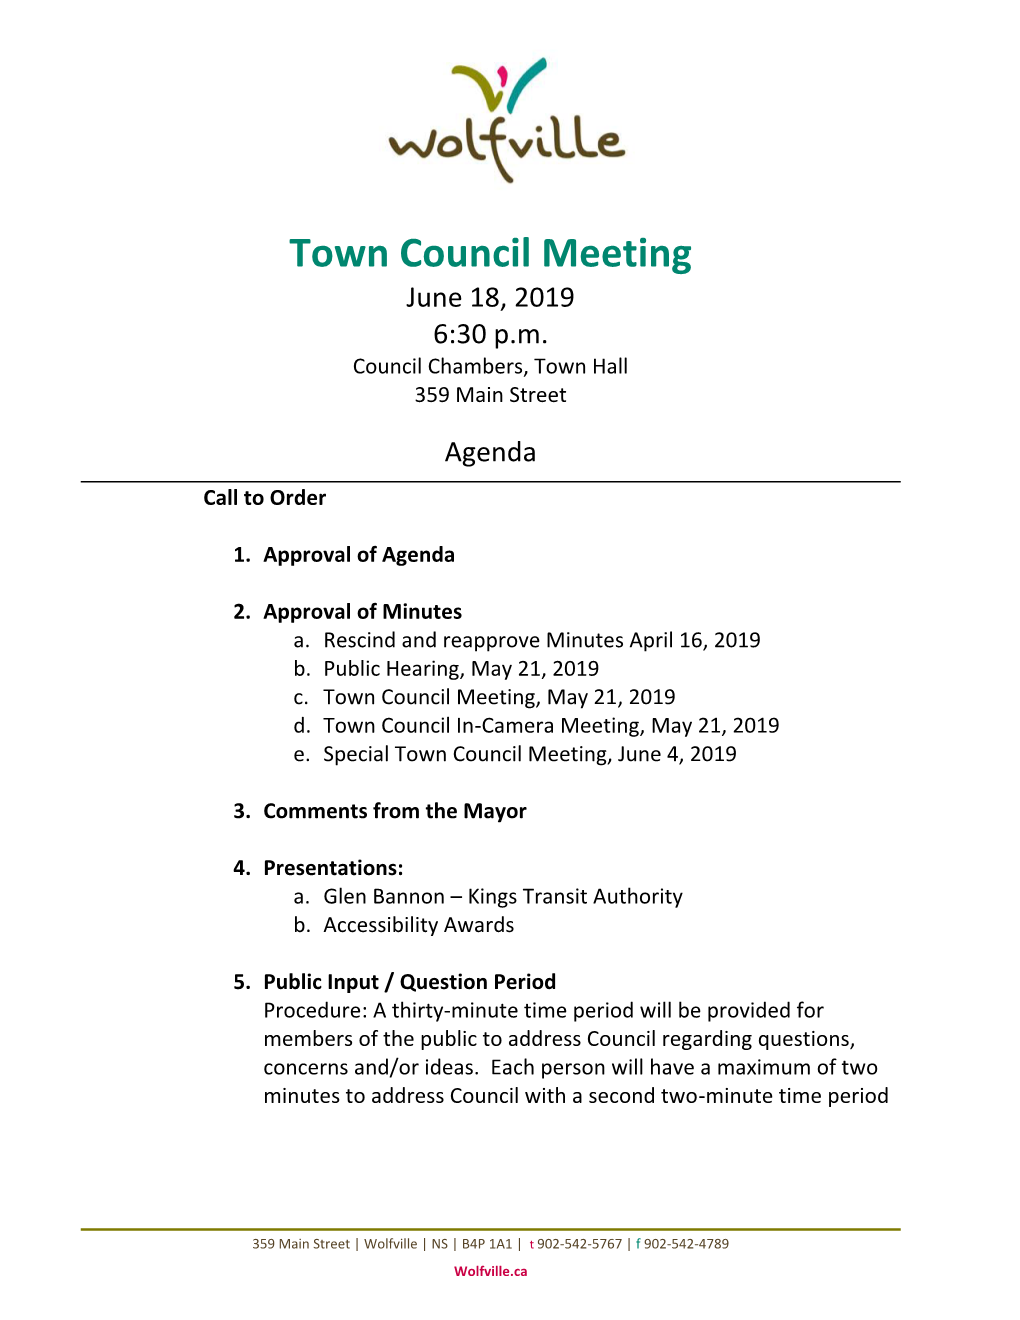 Town Council Meeting June 18, 2019 6:30 P.M